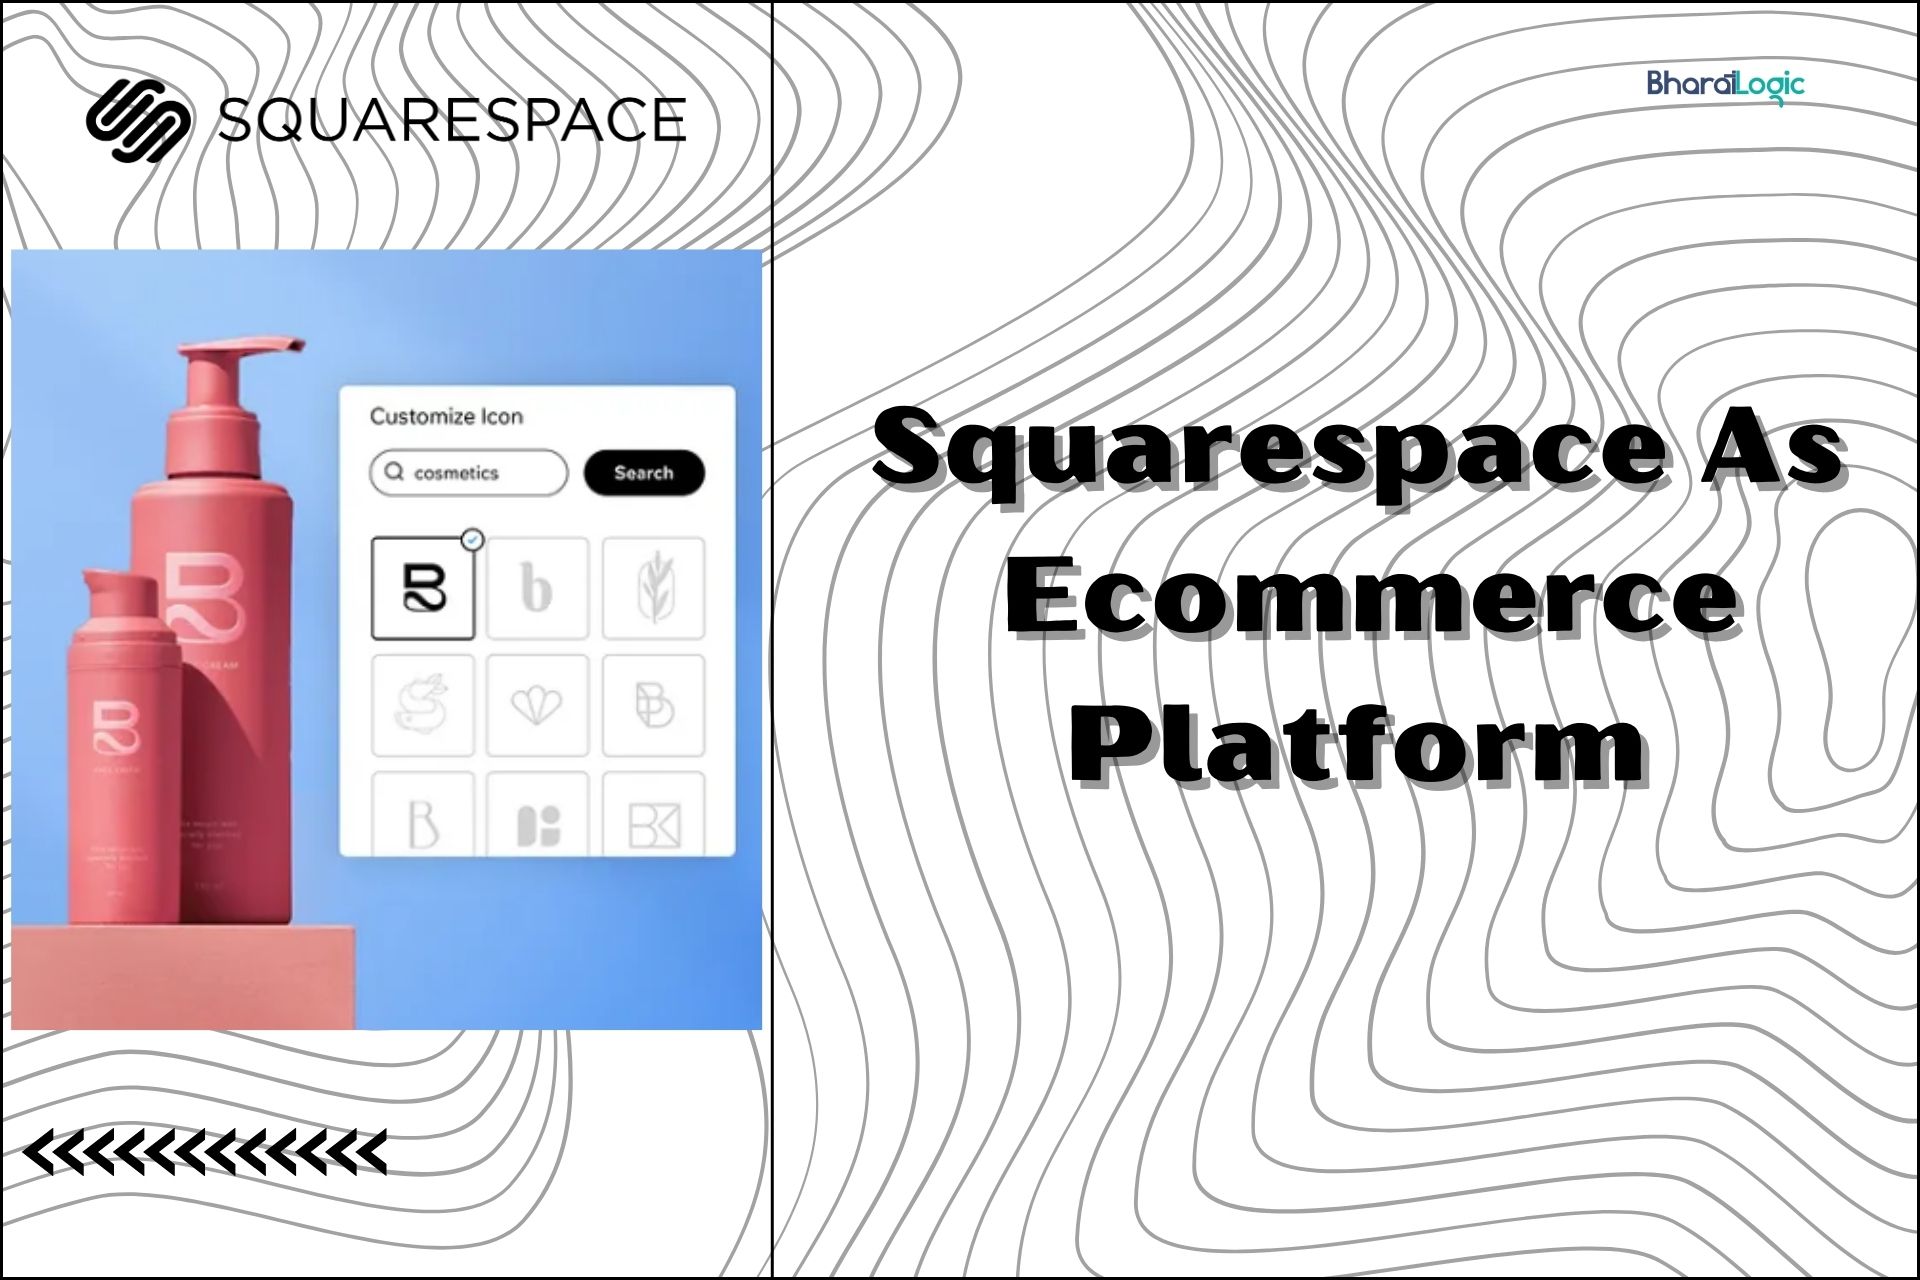 squarespace as an ecommerce platform